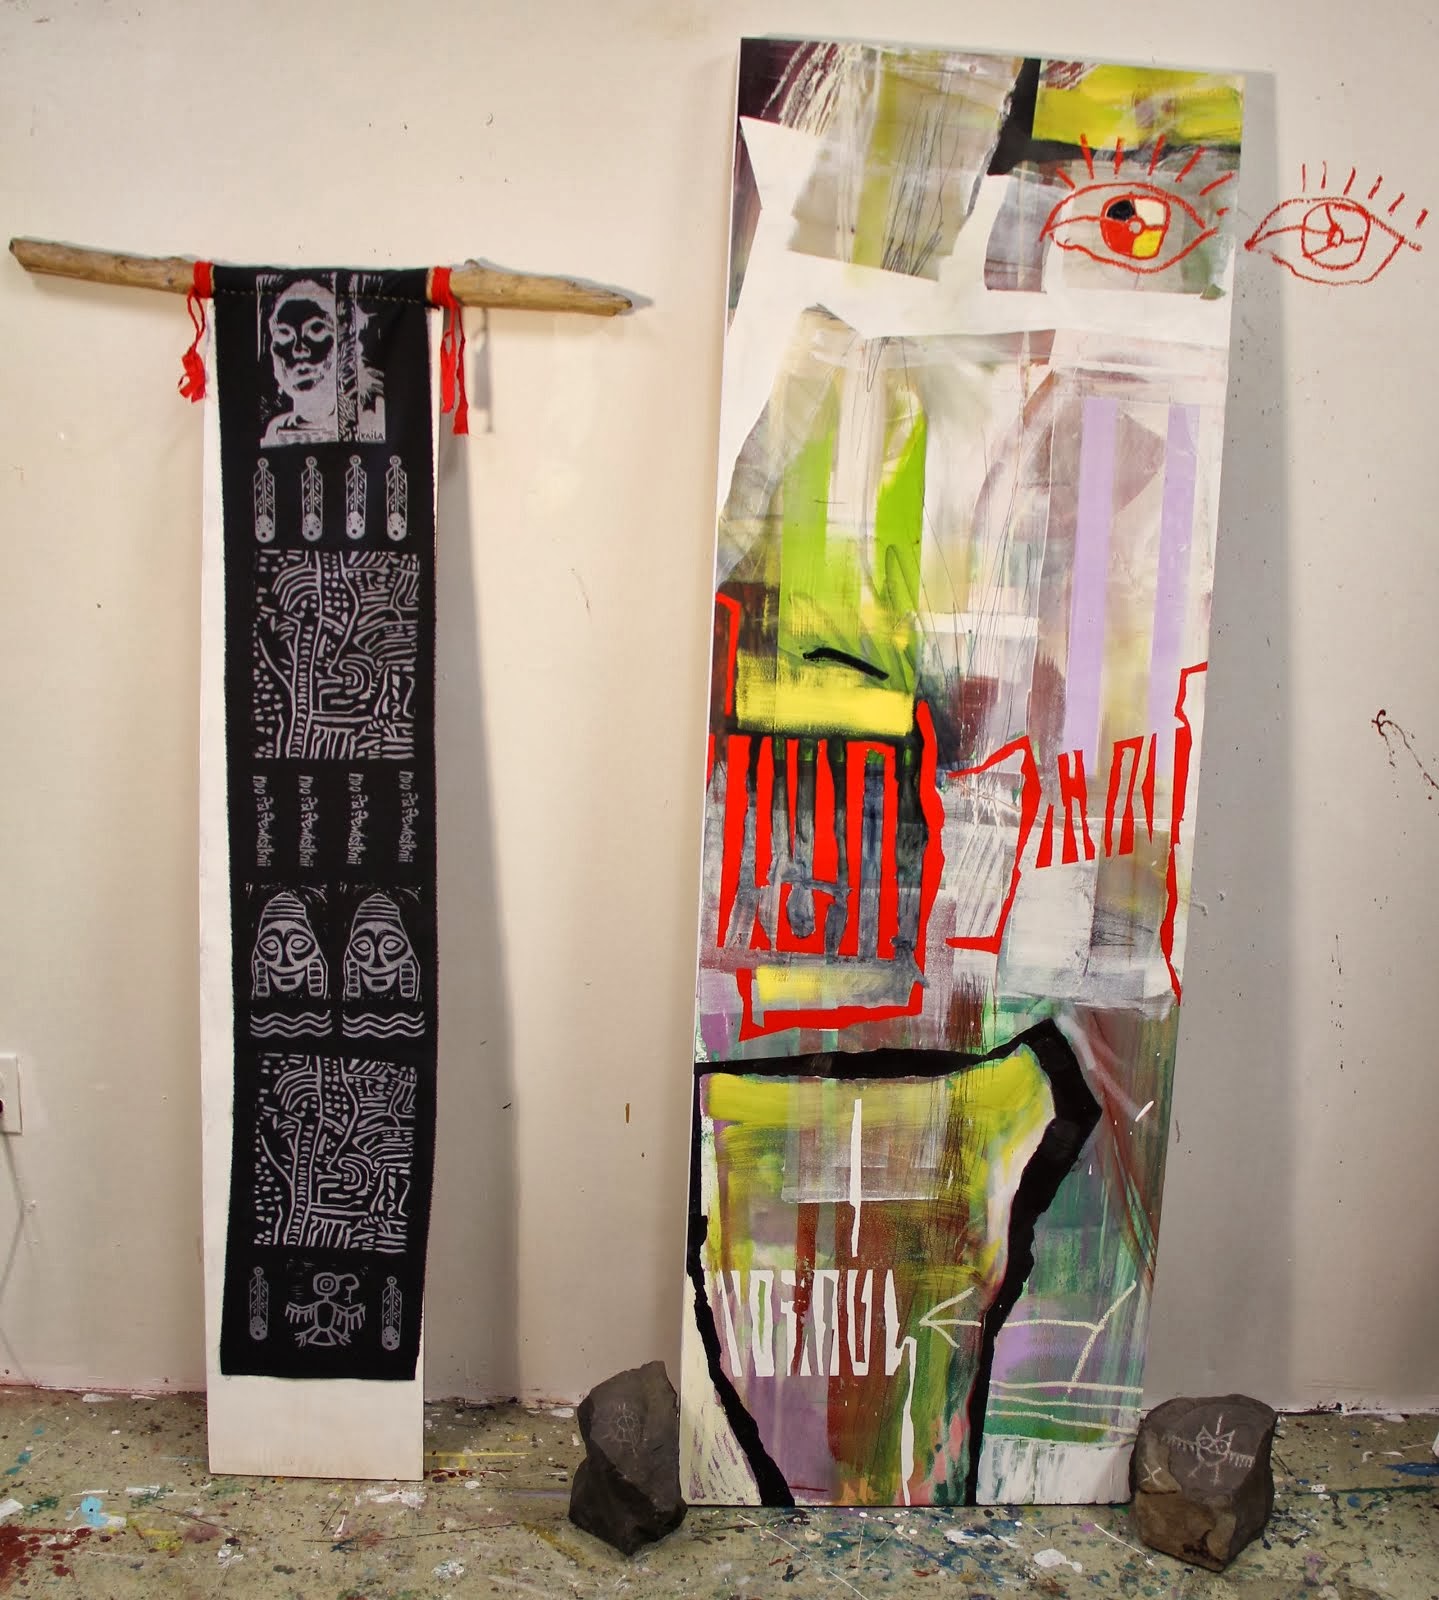 Arrangement of Art objects in the Studio